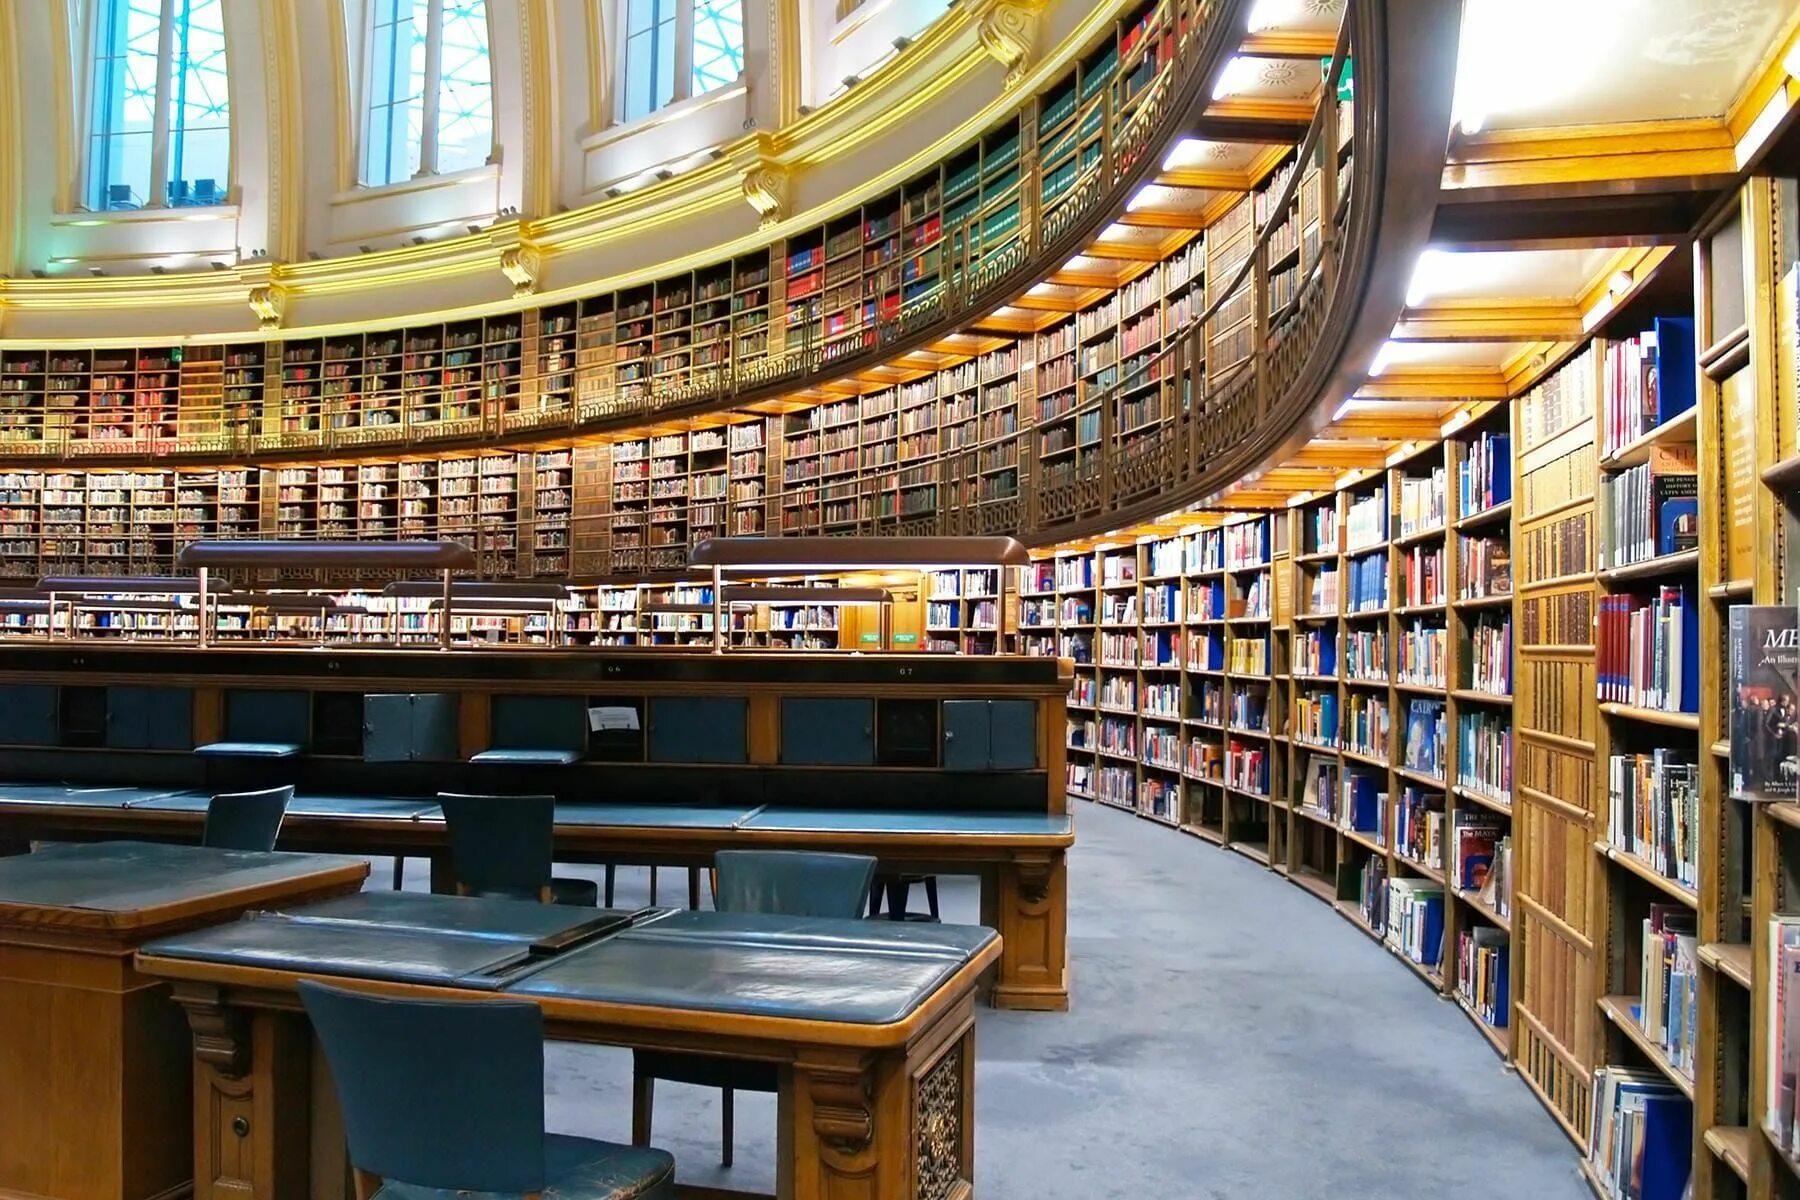 Hooked library. Библиотека британского музея. Библиотека британского музея в Лондоне. Библиотека в Мюнхене. Баварская государственная библиотека в Мюнхене.